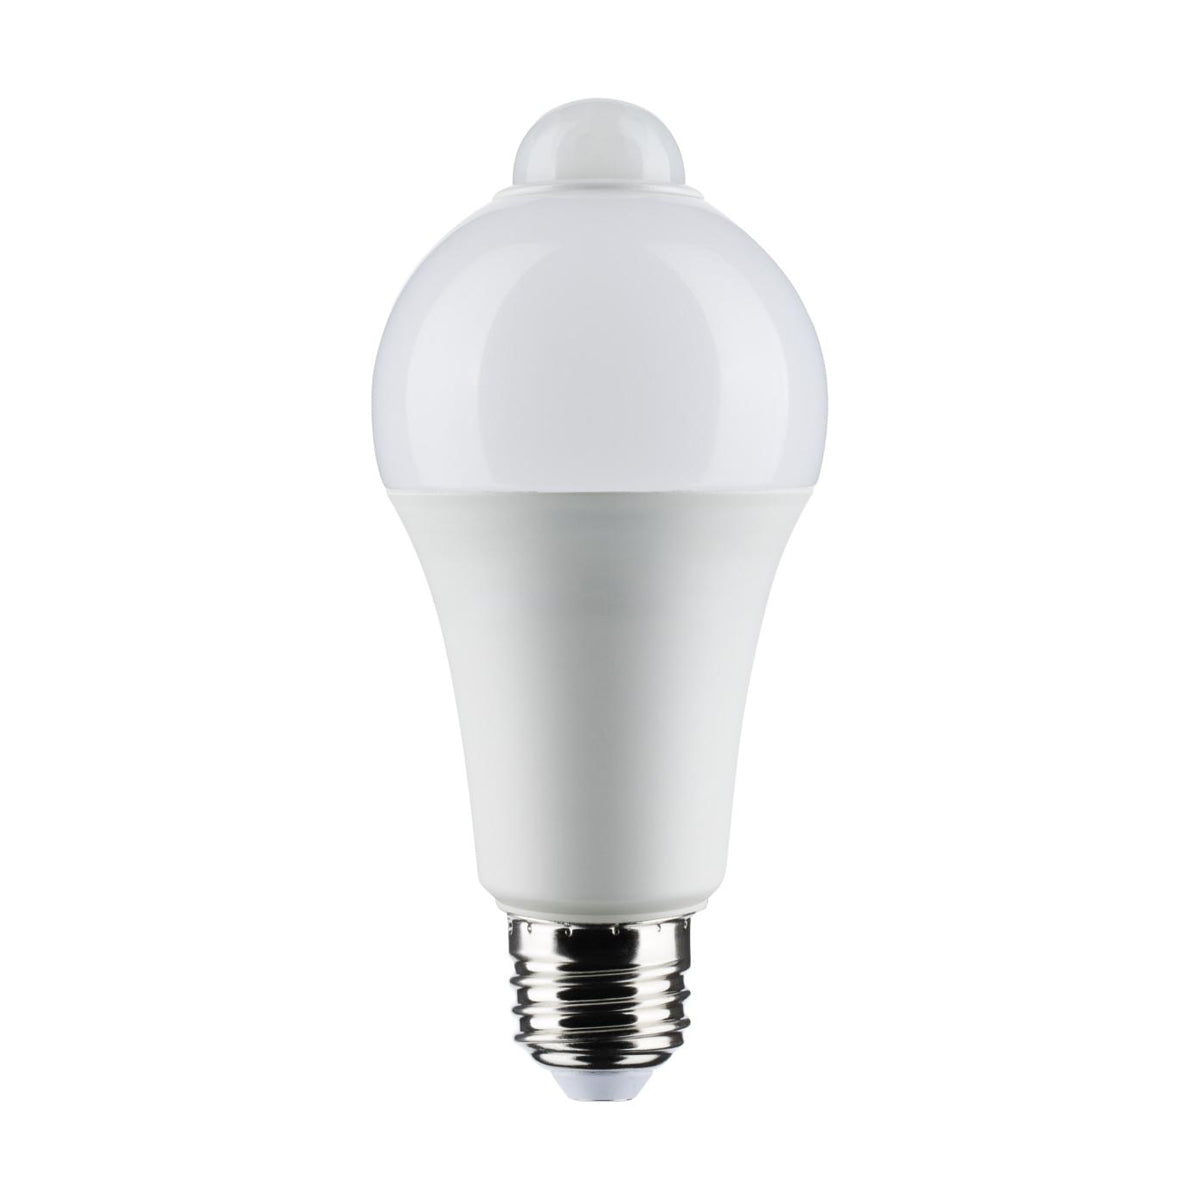 A19 LED Bulb, 12 Watt, 1050 Lumens, 3000K, E26 Medium Base, Frosted Finish, PIR Sensor